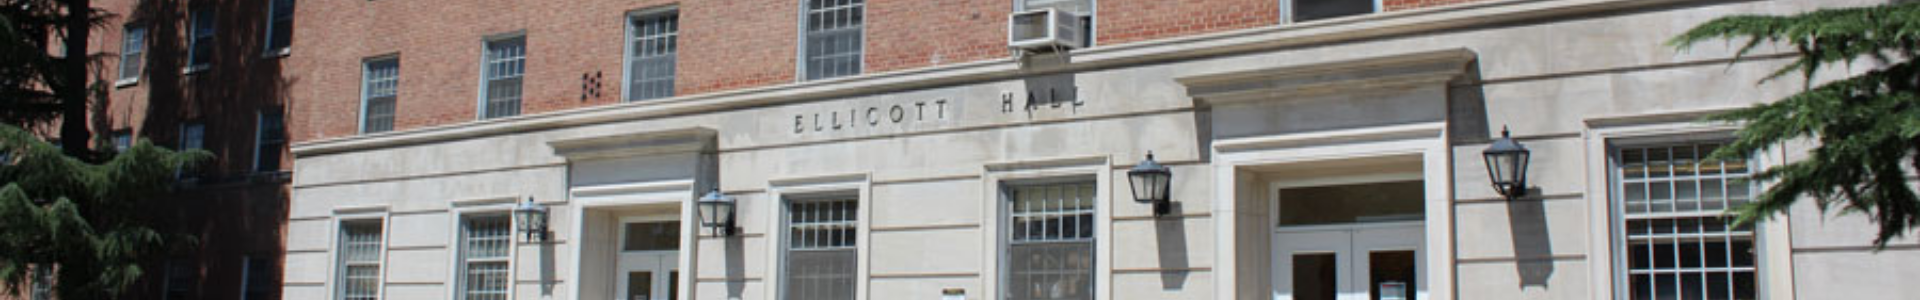 exterior of ellicott hall